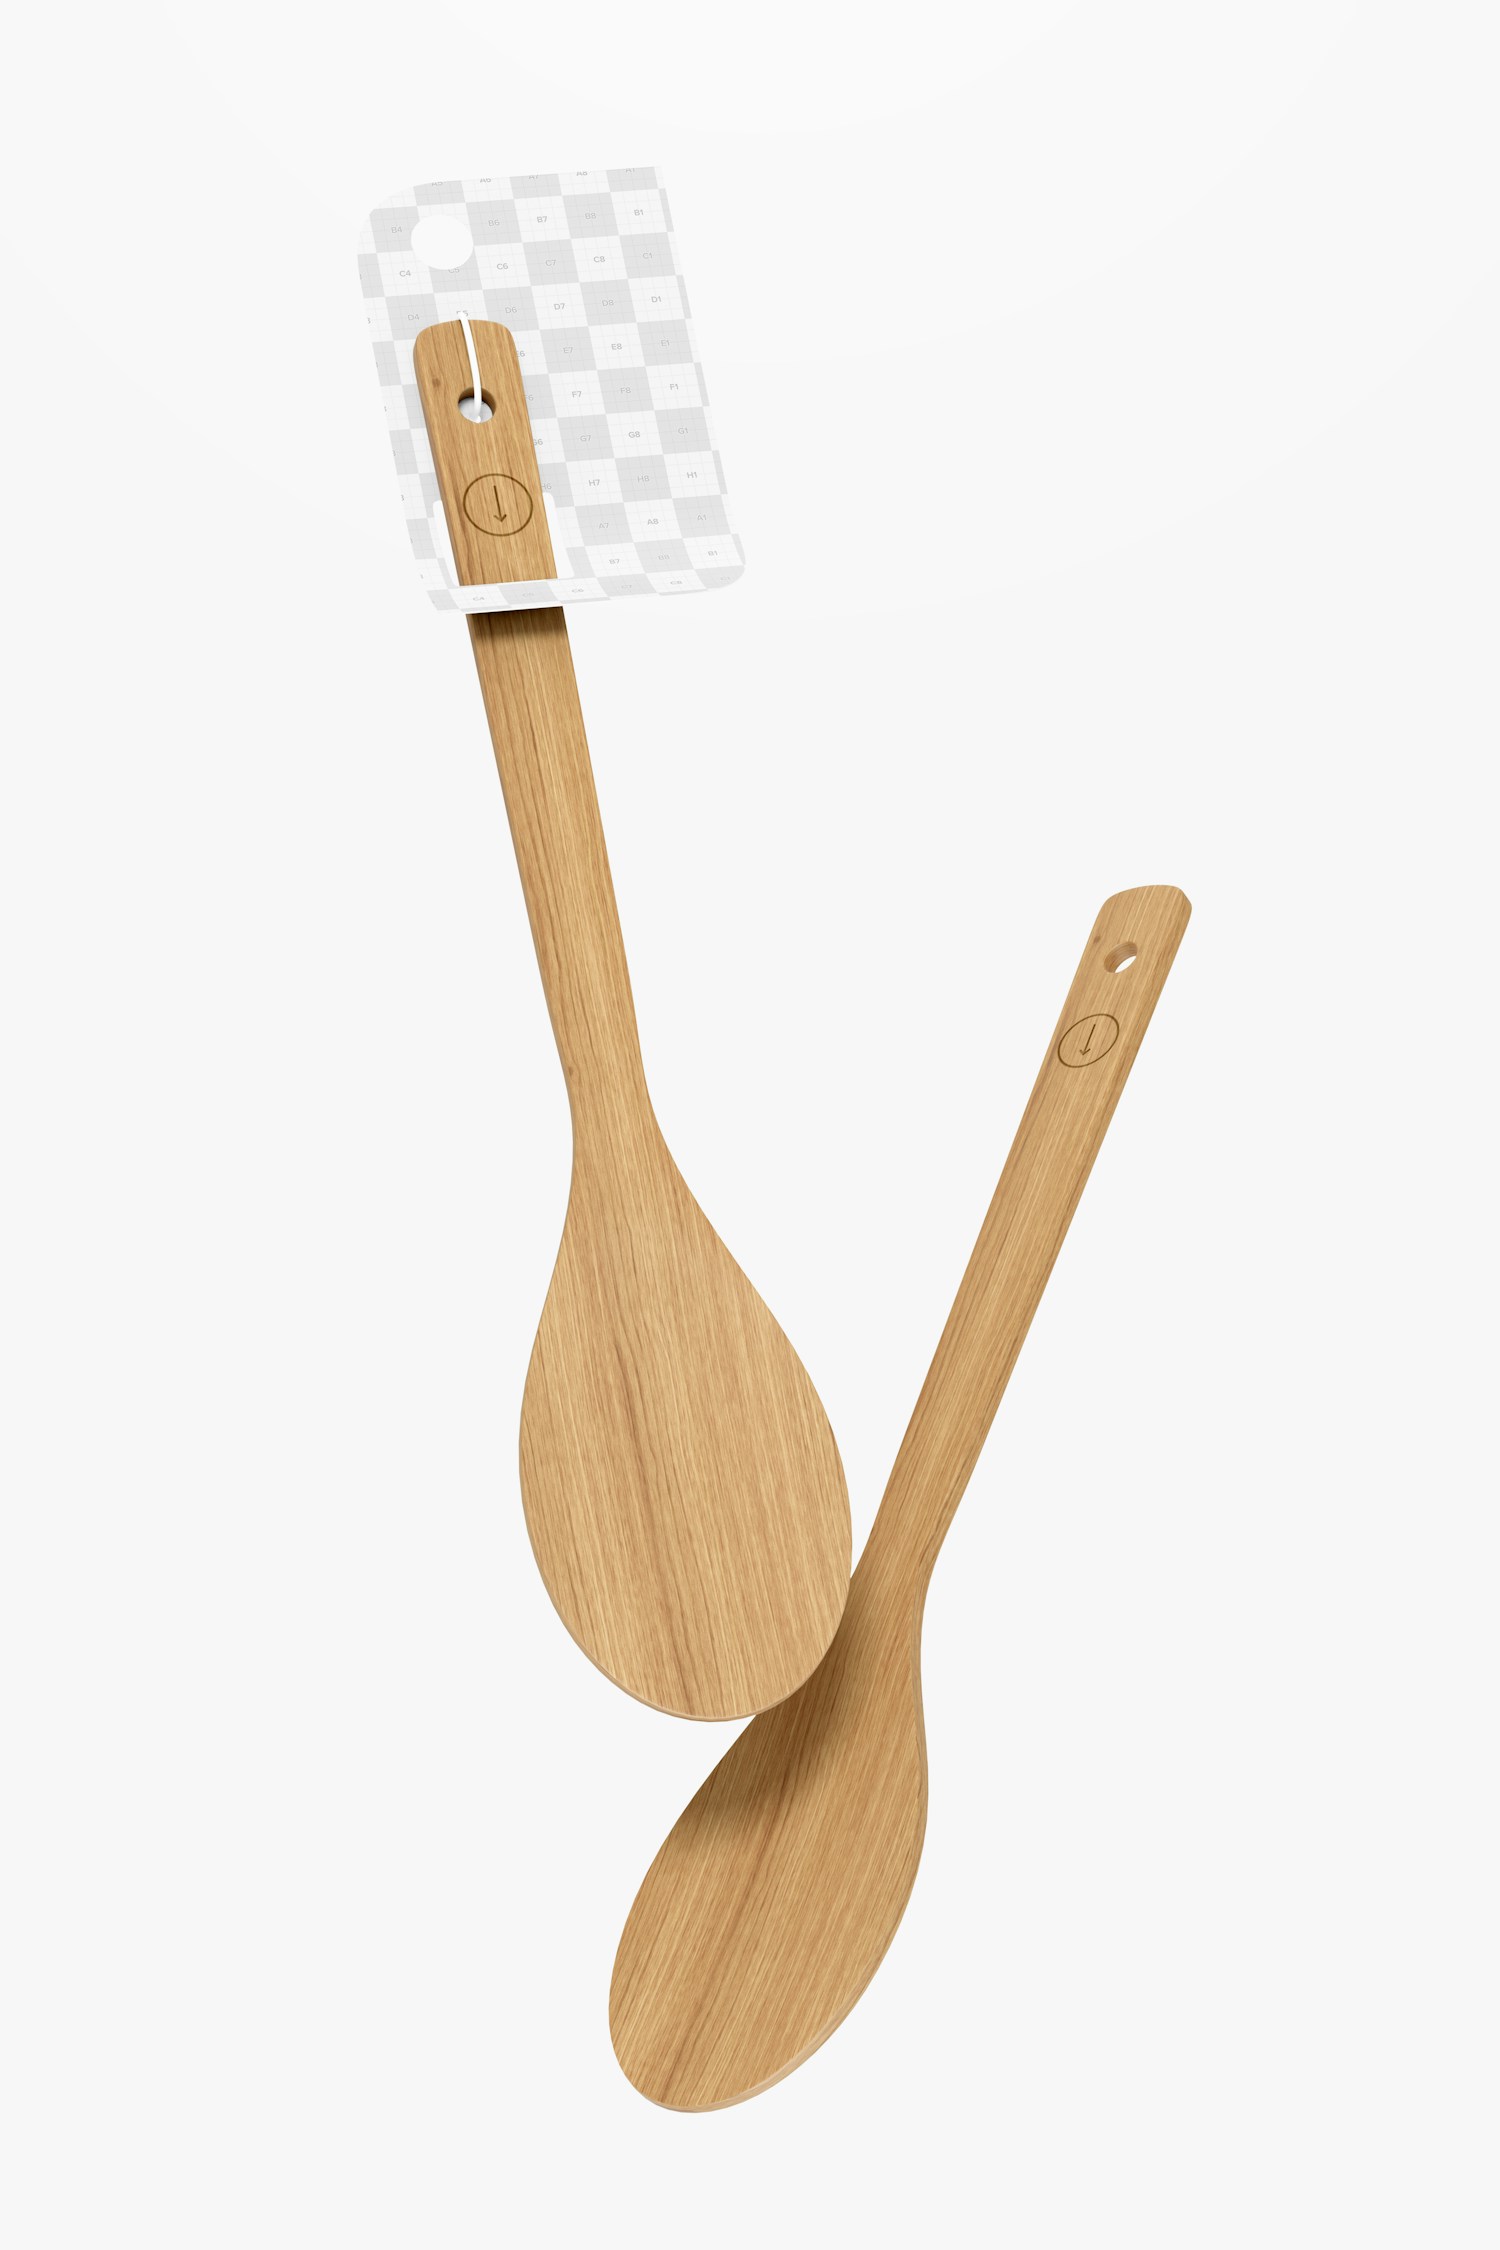 Bamboo Spoons Mockup, Floating